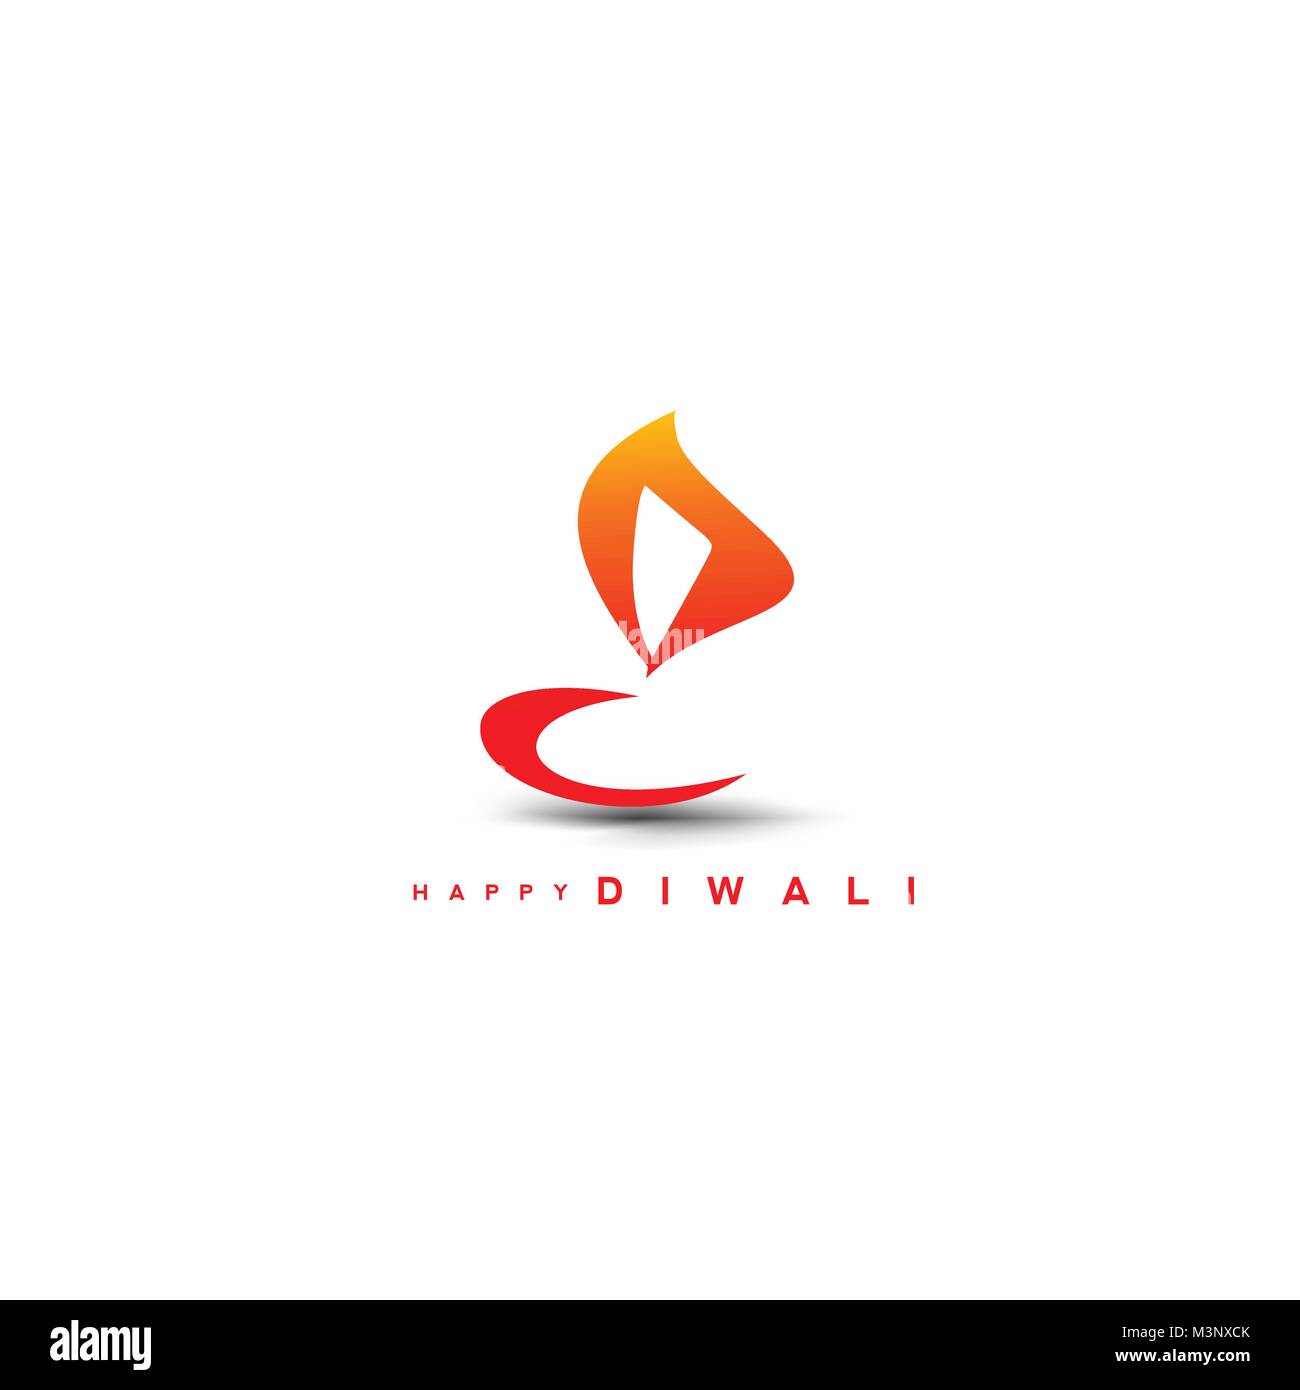 Happy Diwali the Indian festival vector illustration Stock Vector